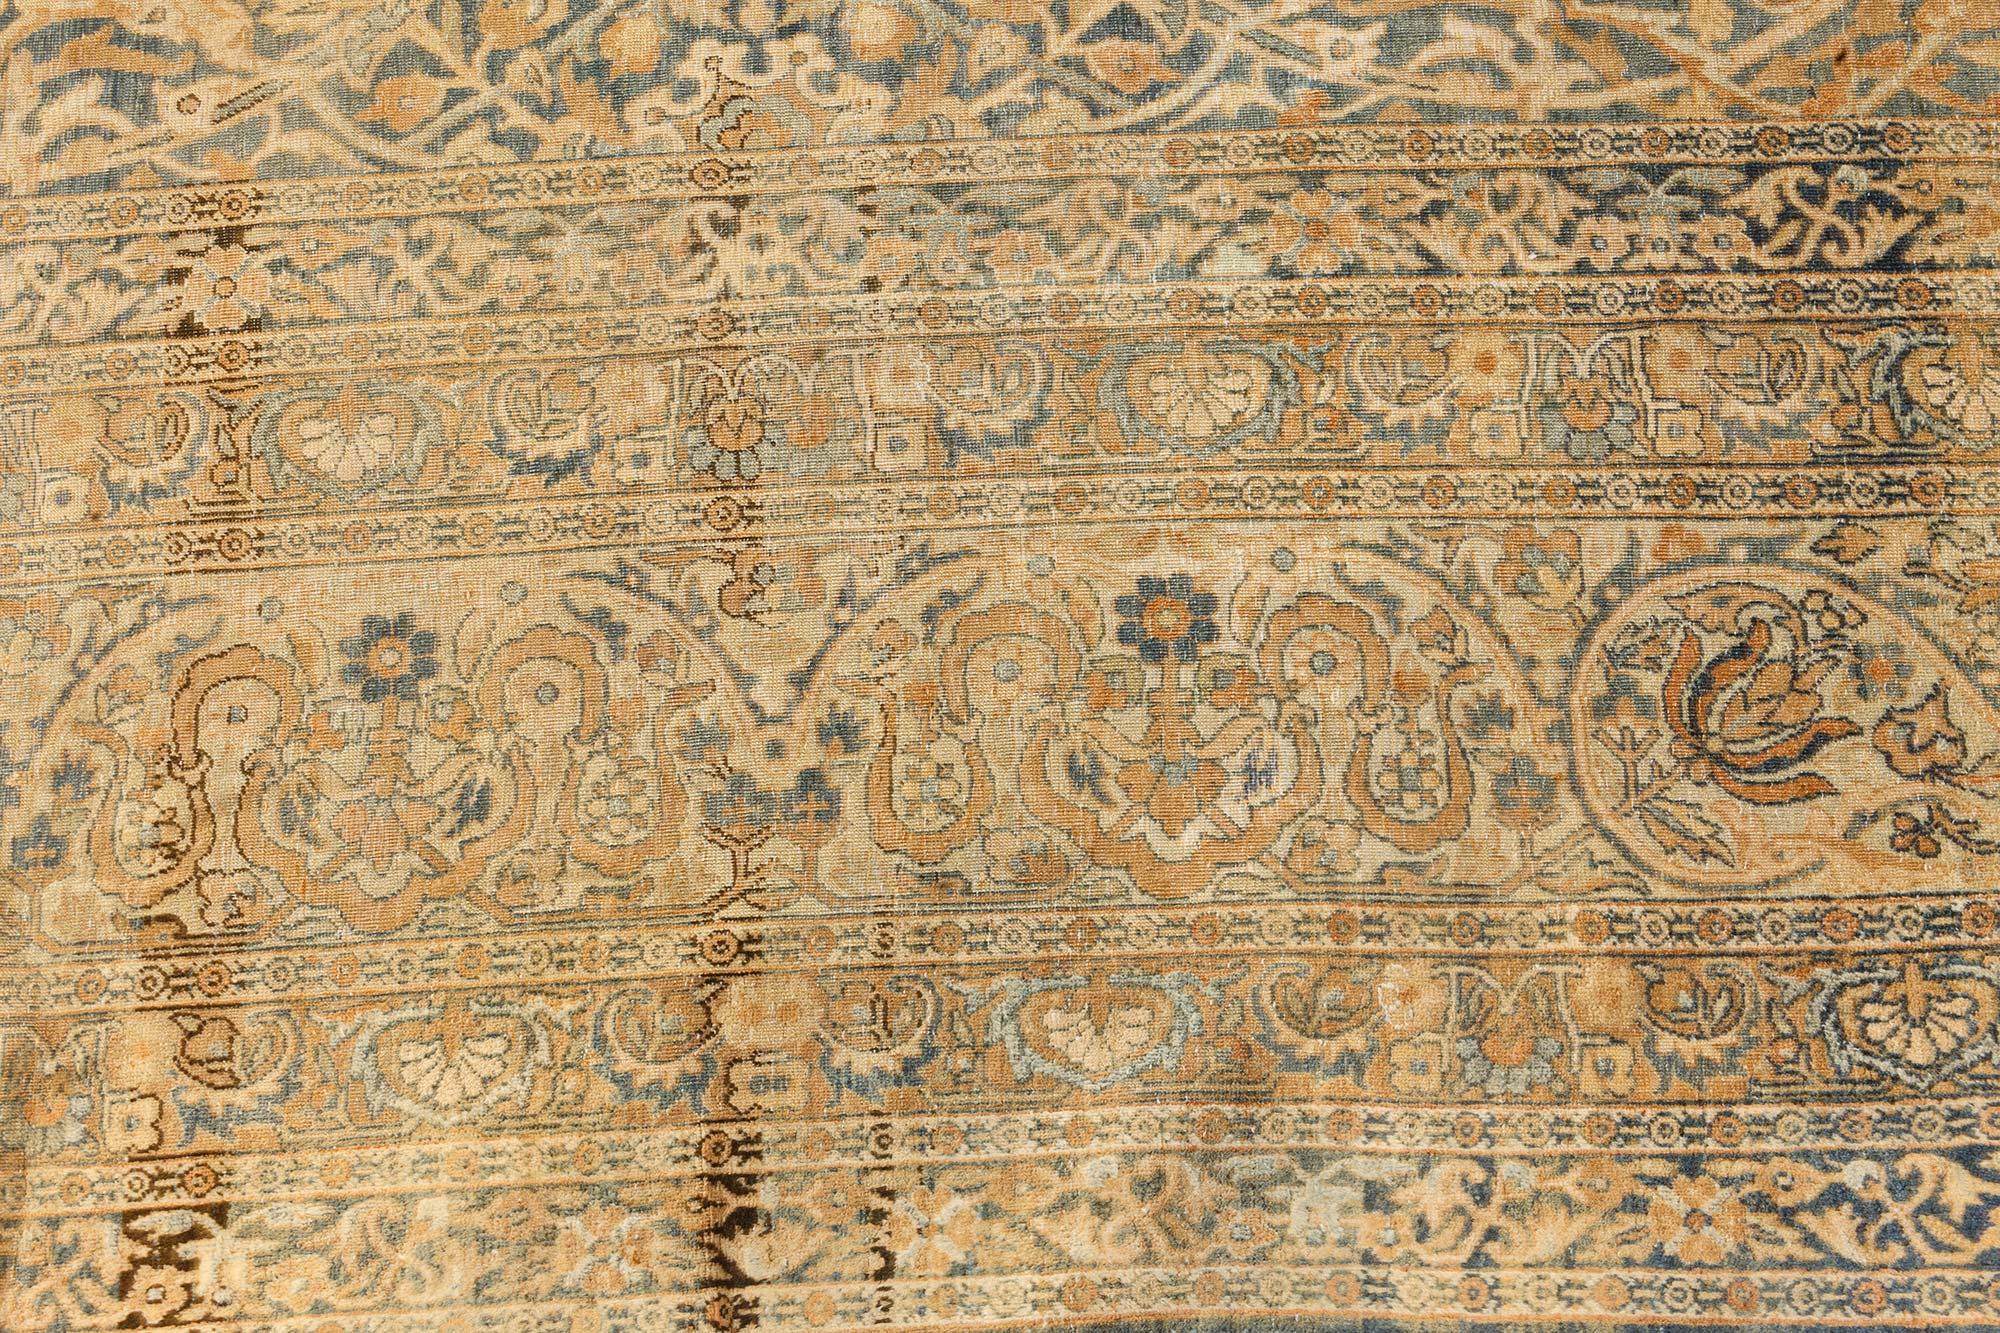 Early 20th century Persian Kirman handmade wool rug
Size: 11'10